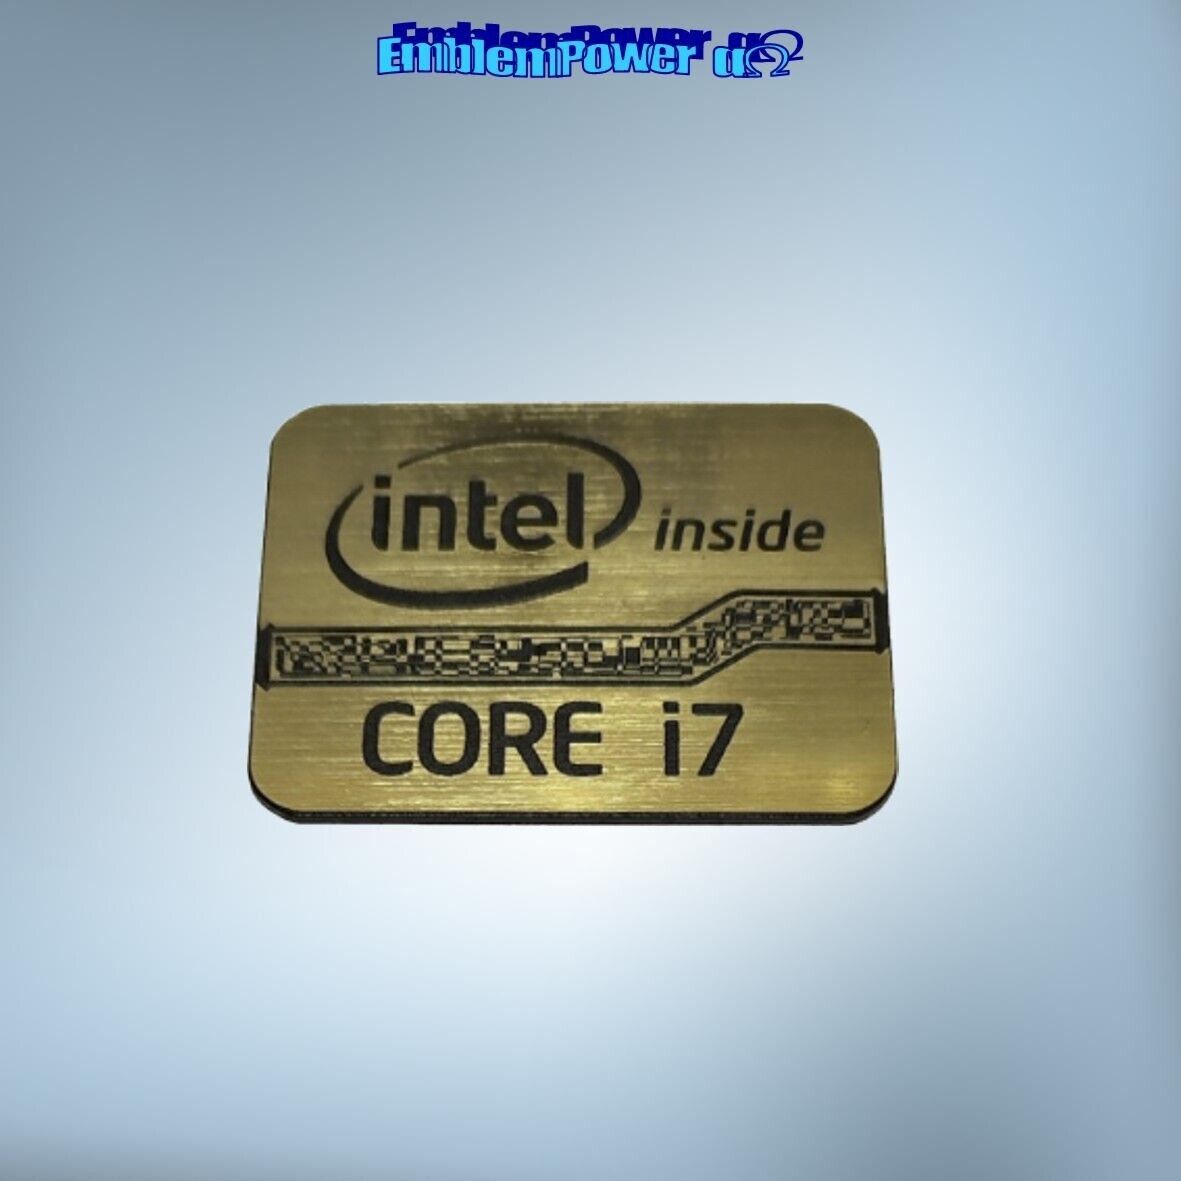 Intel Core i7 limited 21x16mm Emblem brushed Logo Sticker Badge Decal Aufkleber